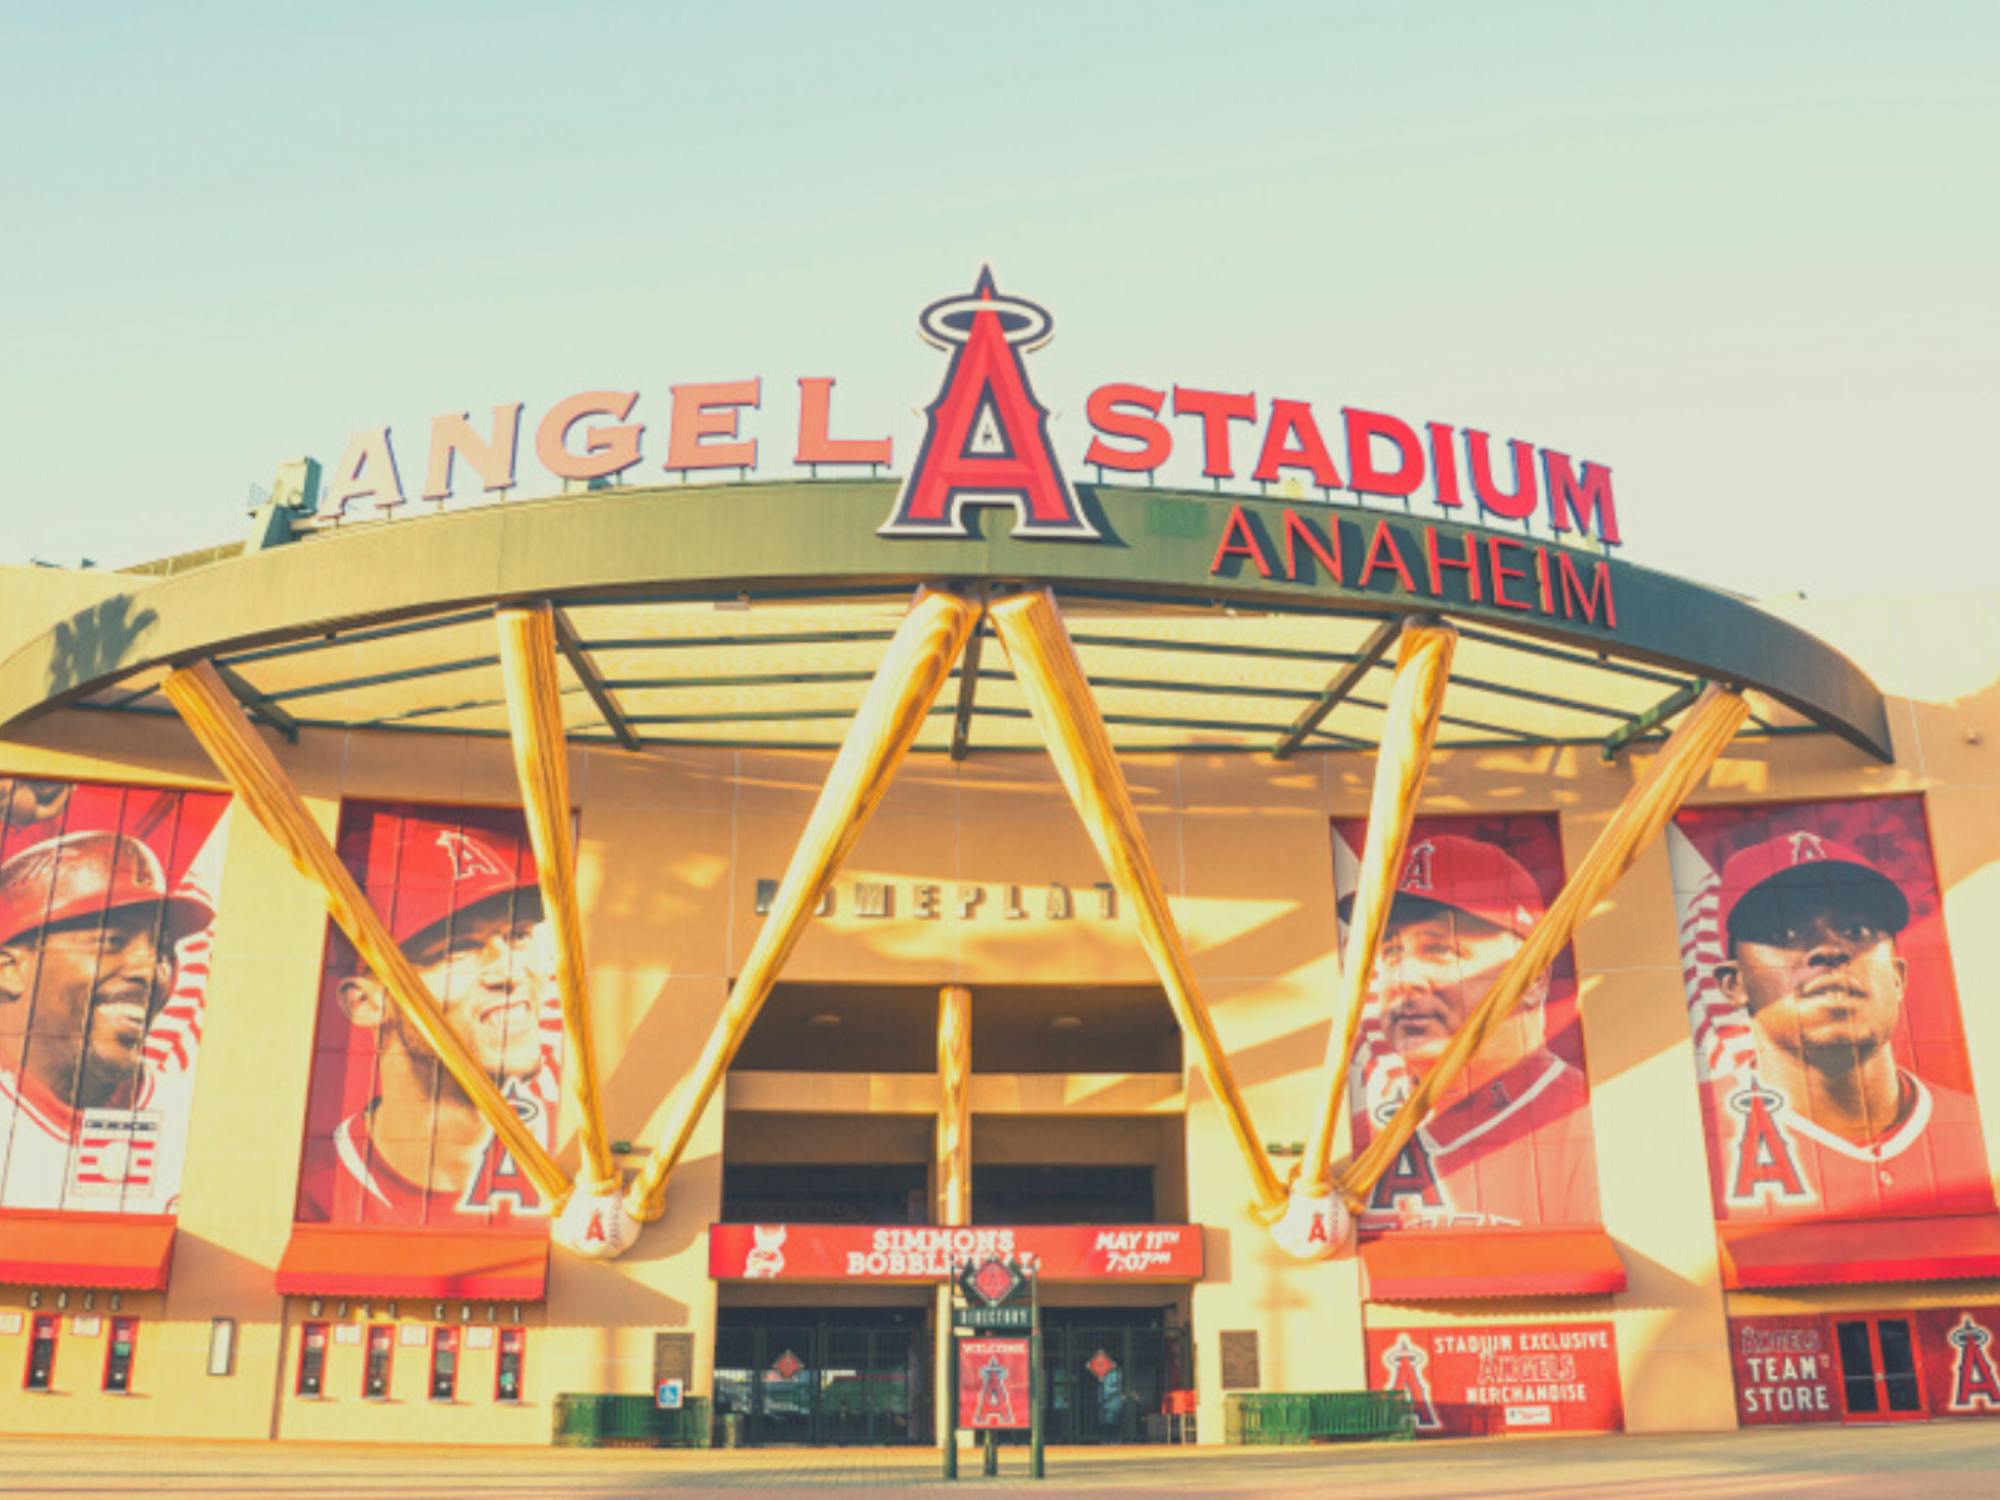 Los Angeles Angels-honkbalwedstrijd in het Angel Stadium